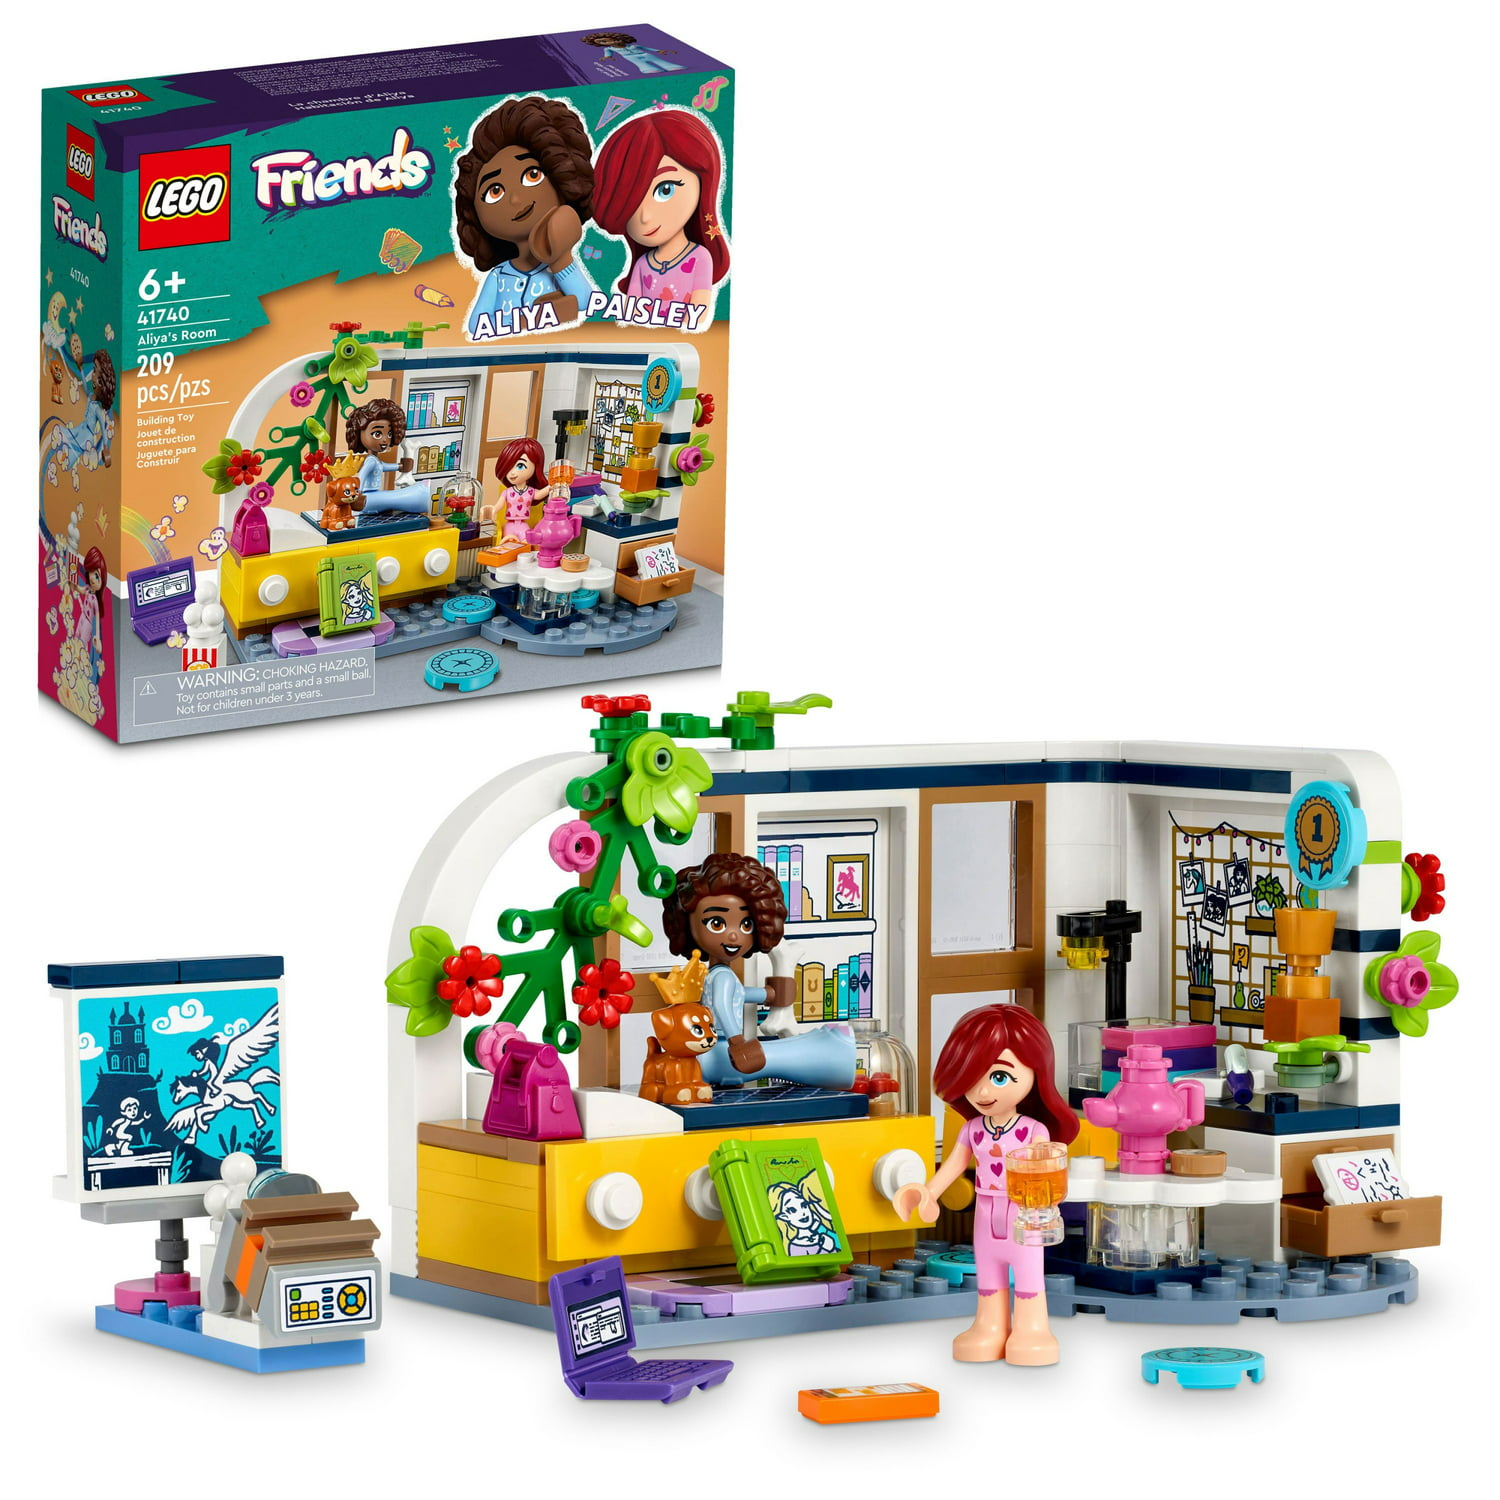 209-Piece LEGO Friends Aliya's Room Building Set (41740) $8 + Free S&H w/ Walmart+ or $35+